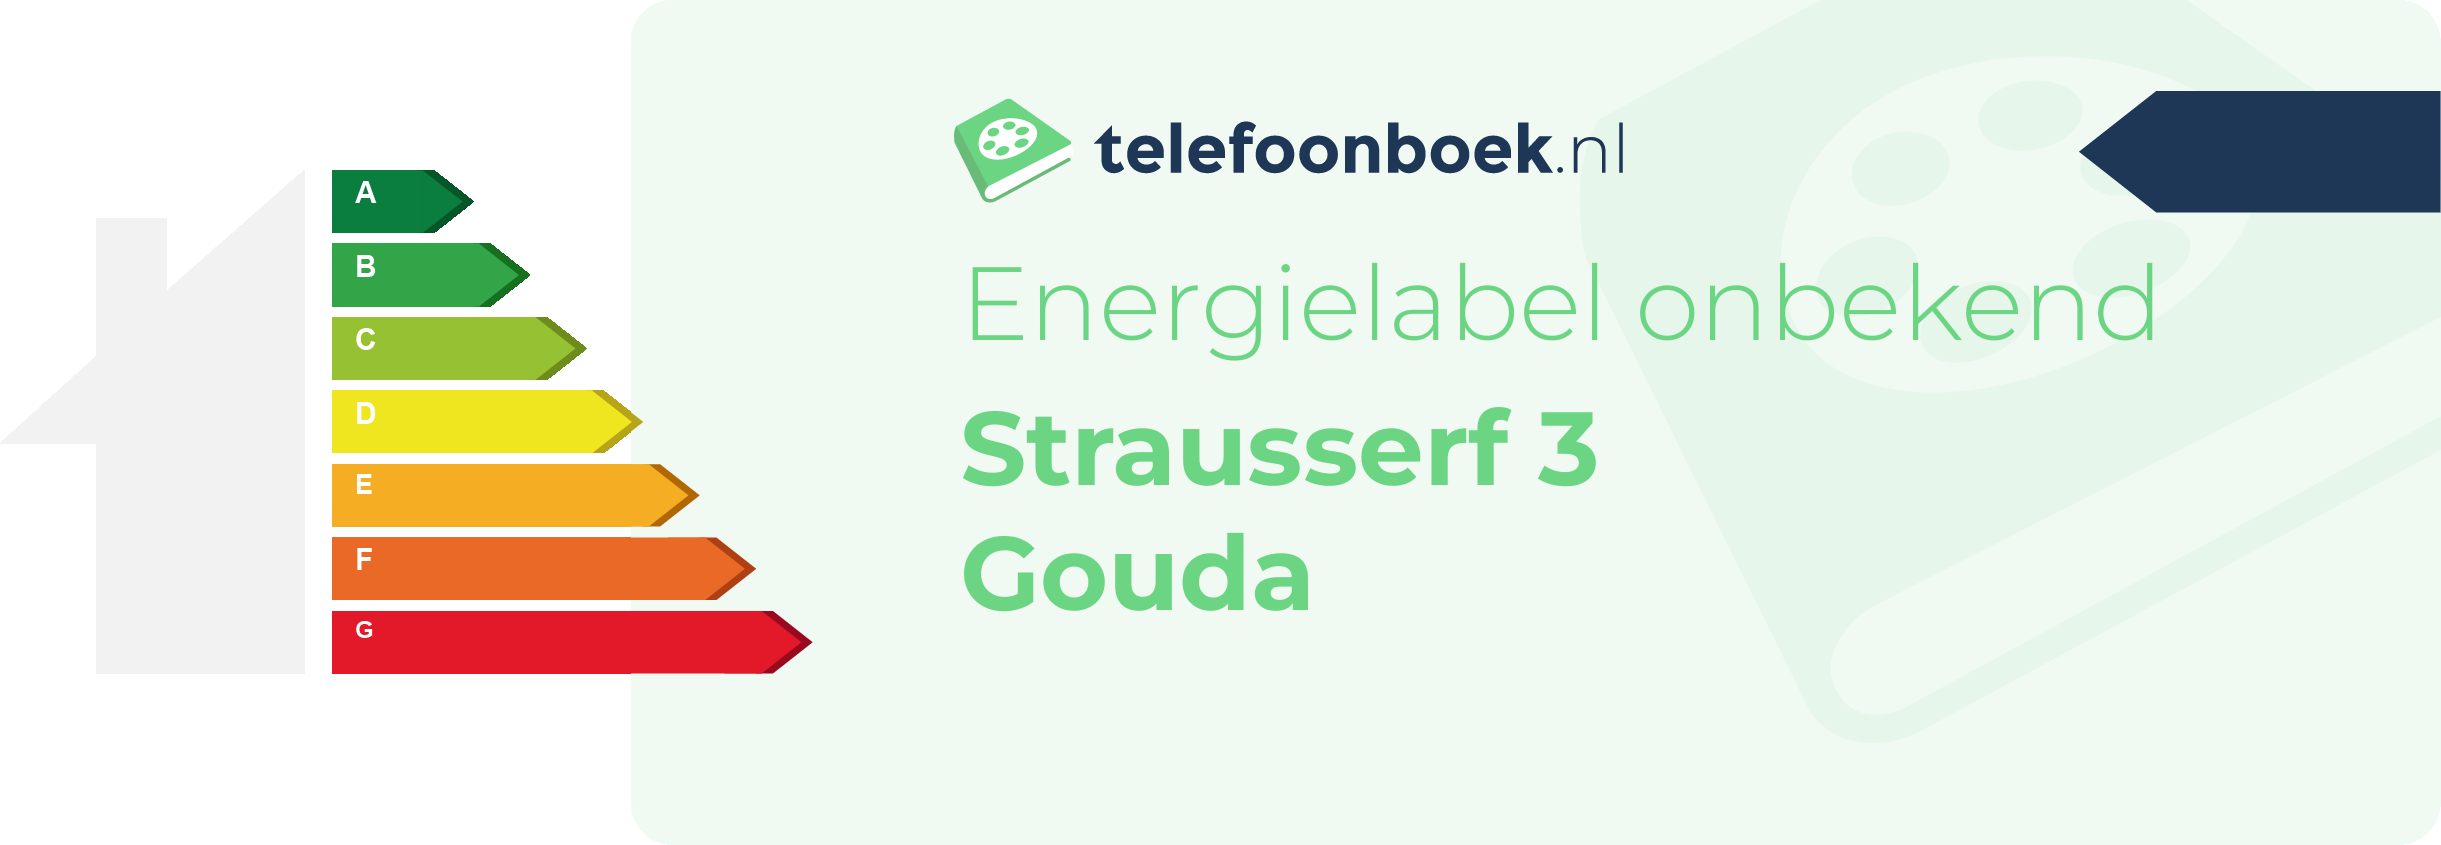 Energielabel Strausserf 3 Gouda